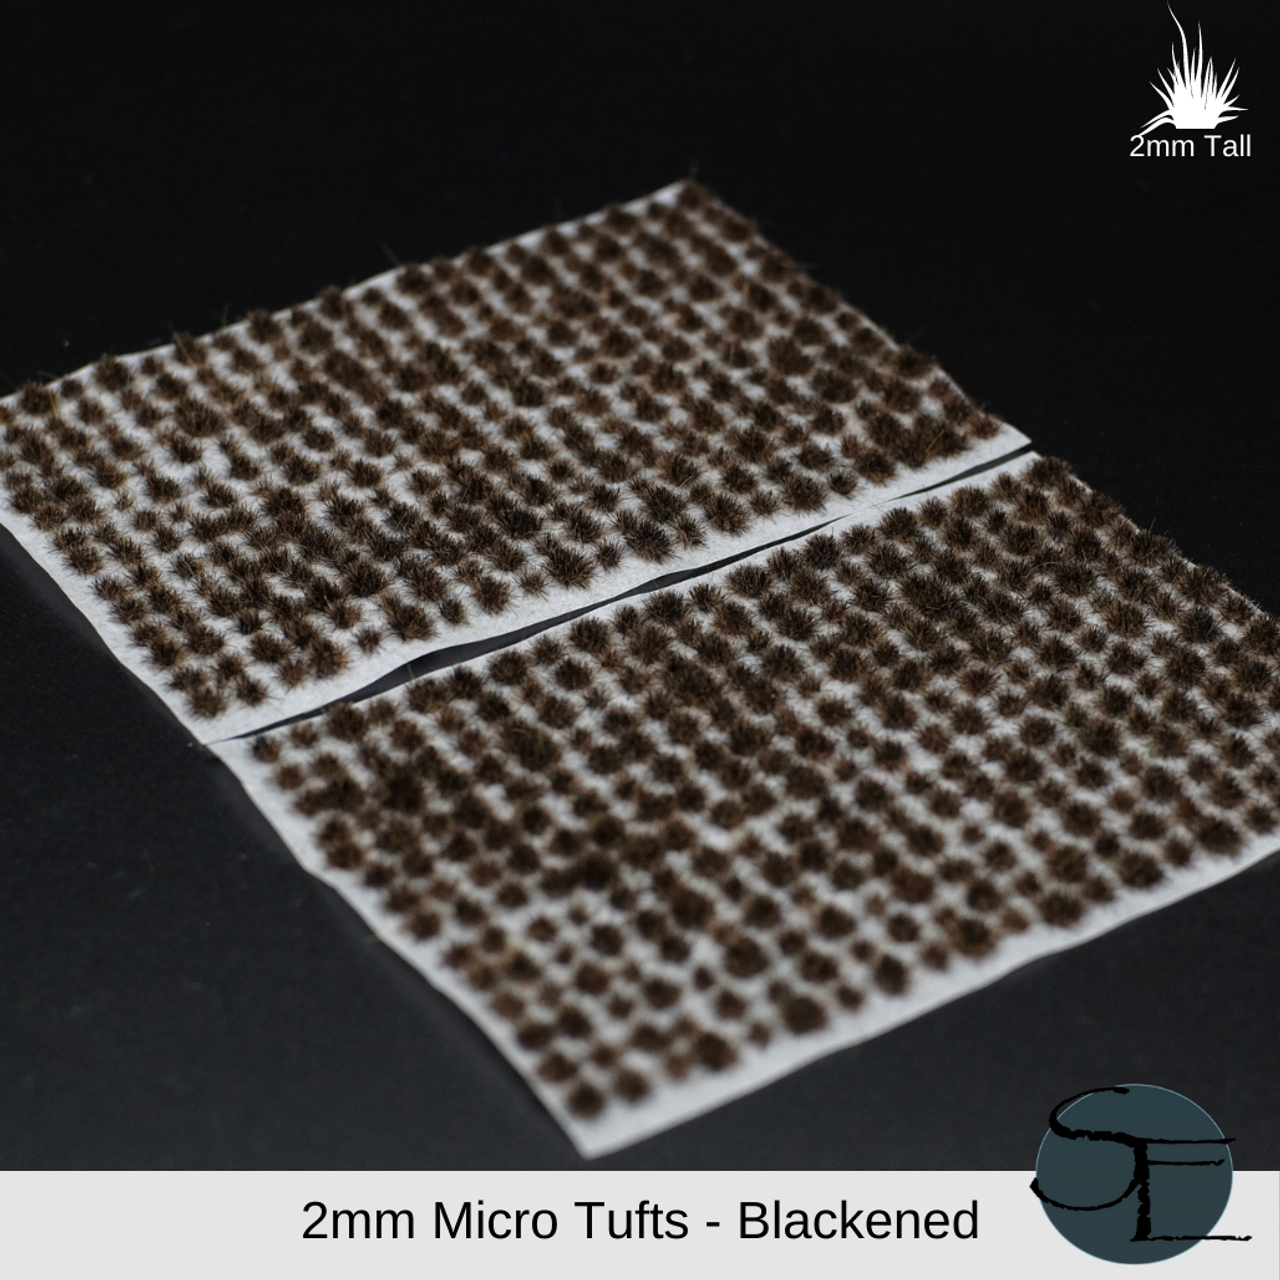 50 Self-Adhesive Tufts per Sheet 12mm MASSIVE STRAW GRASS TUFTS 